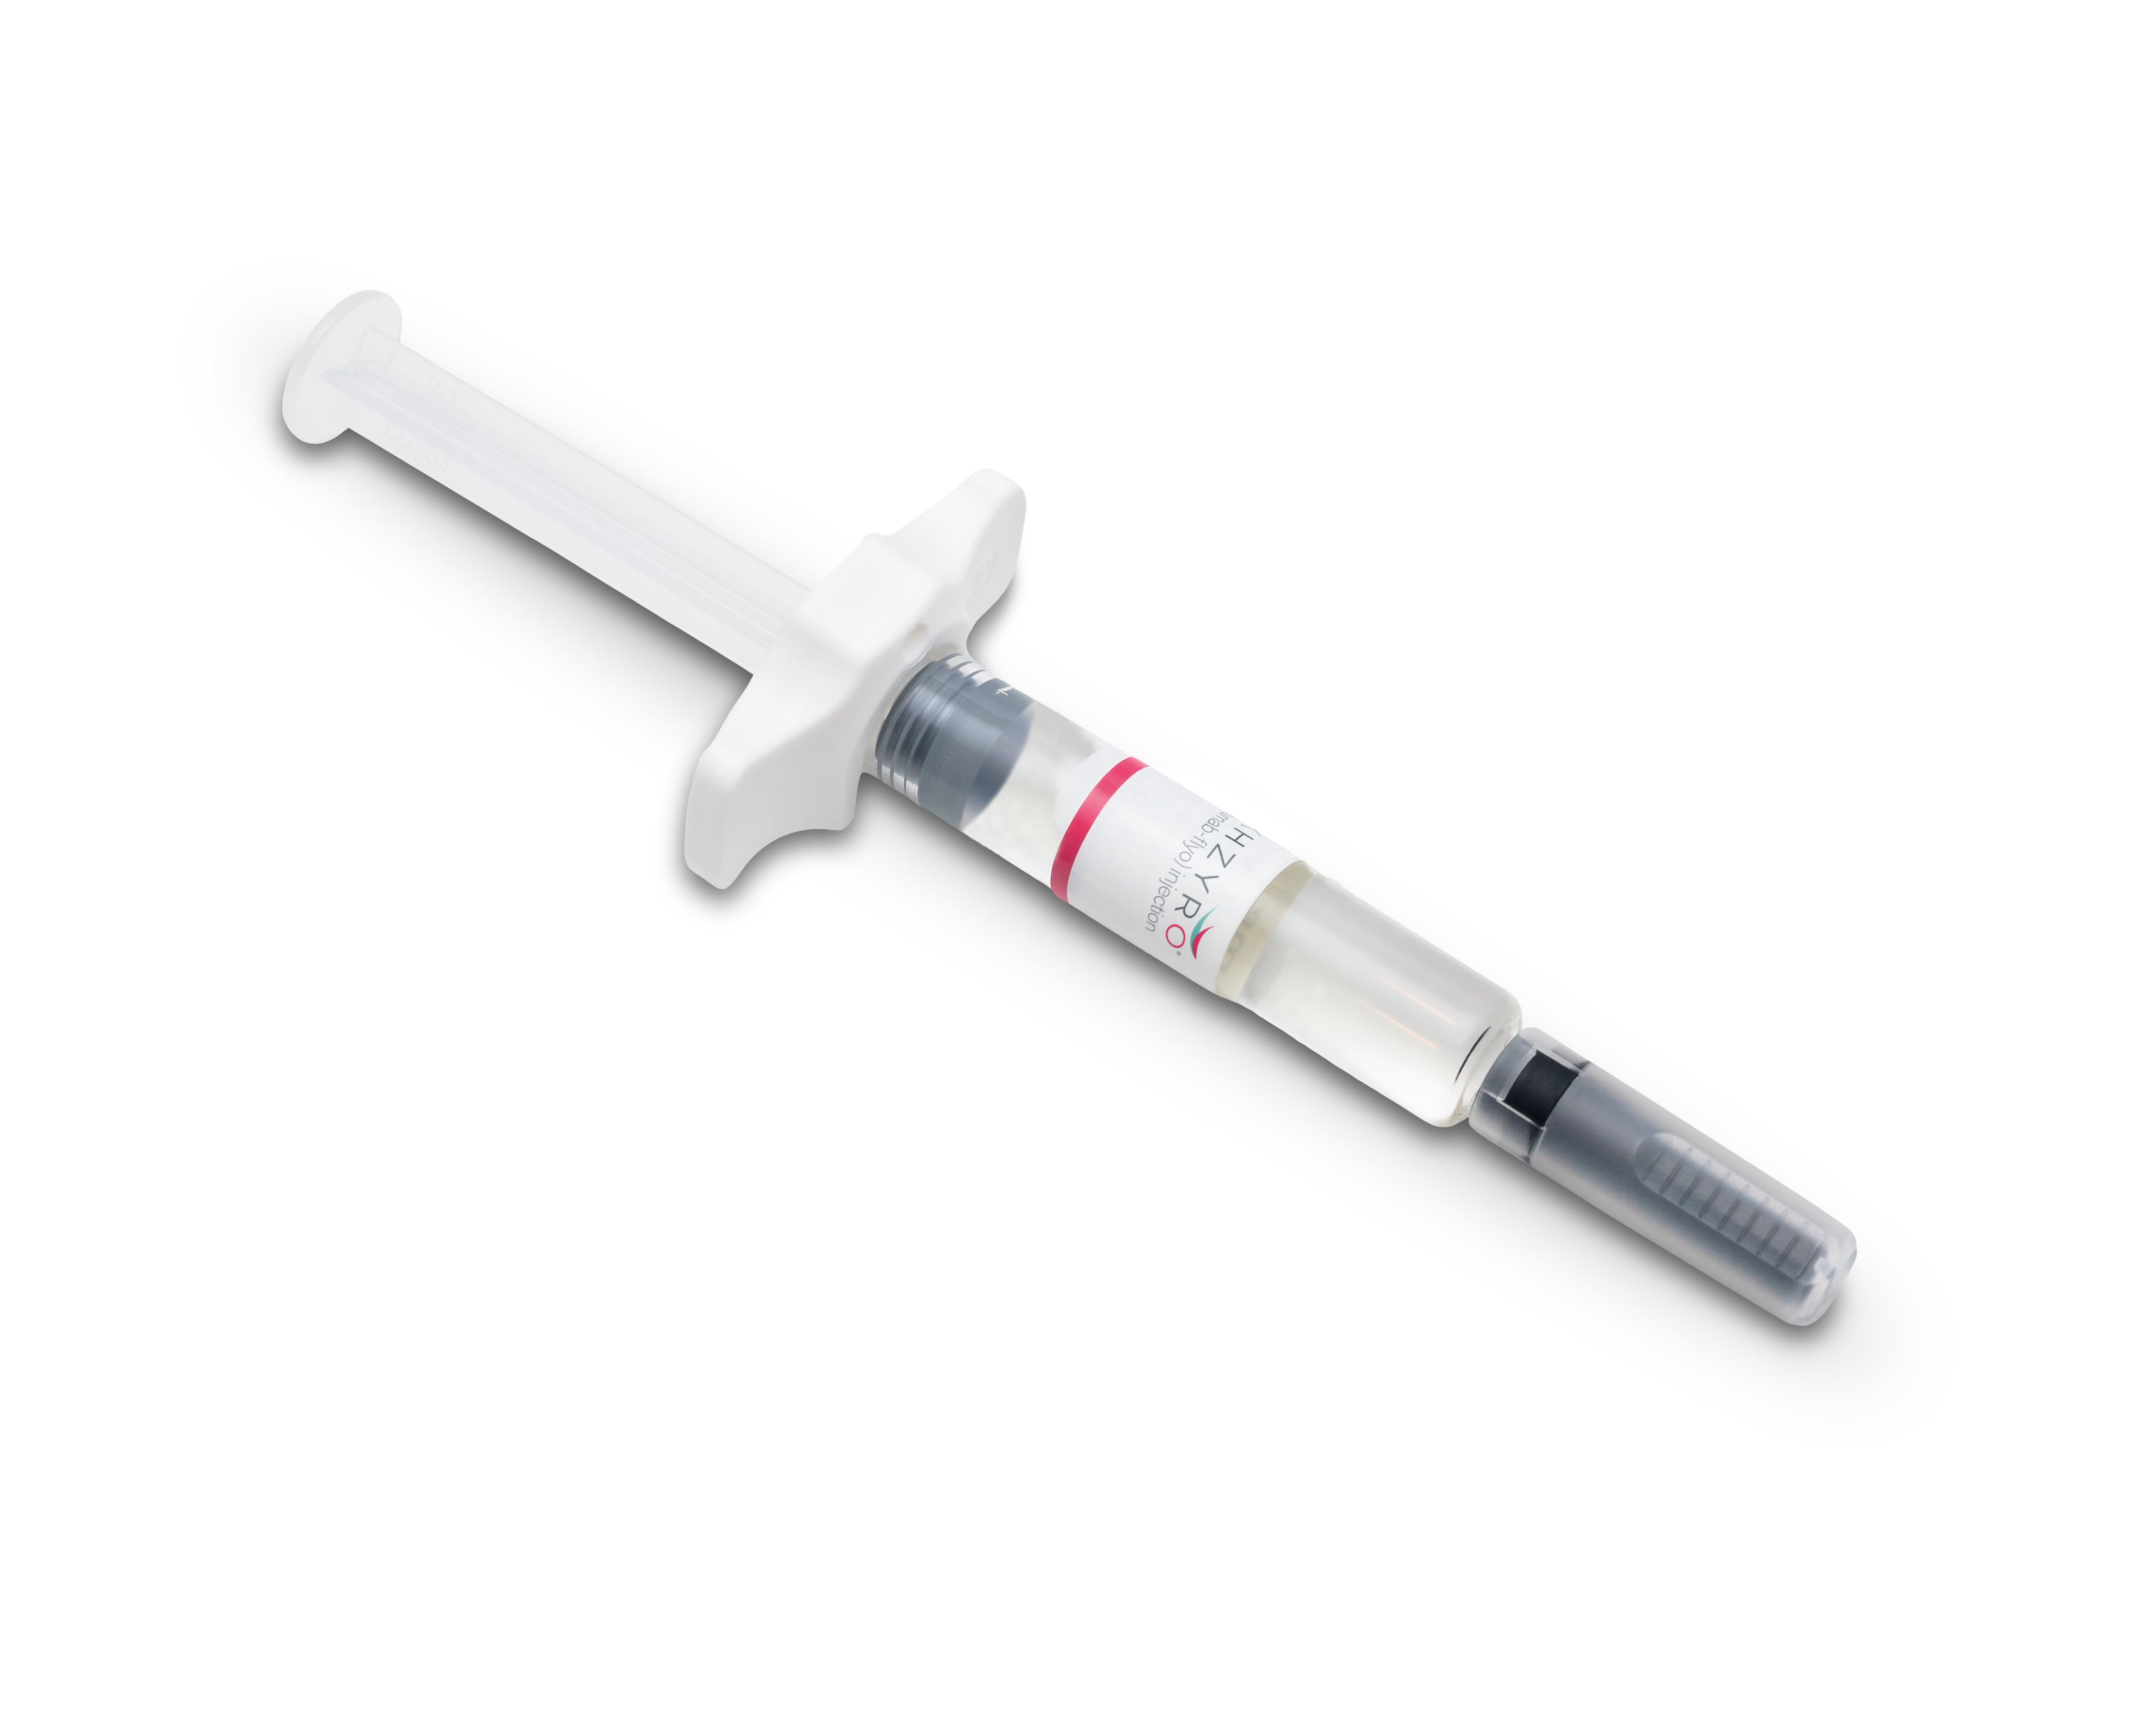 TAKHZYRO (lanadelumab-flyo) 300 mg/ml One(1) single-dose prefilled syringe 2 mL (47783646-01) 